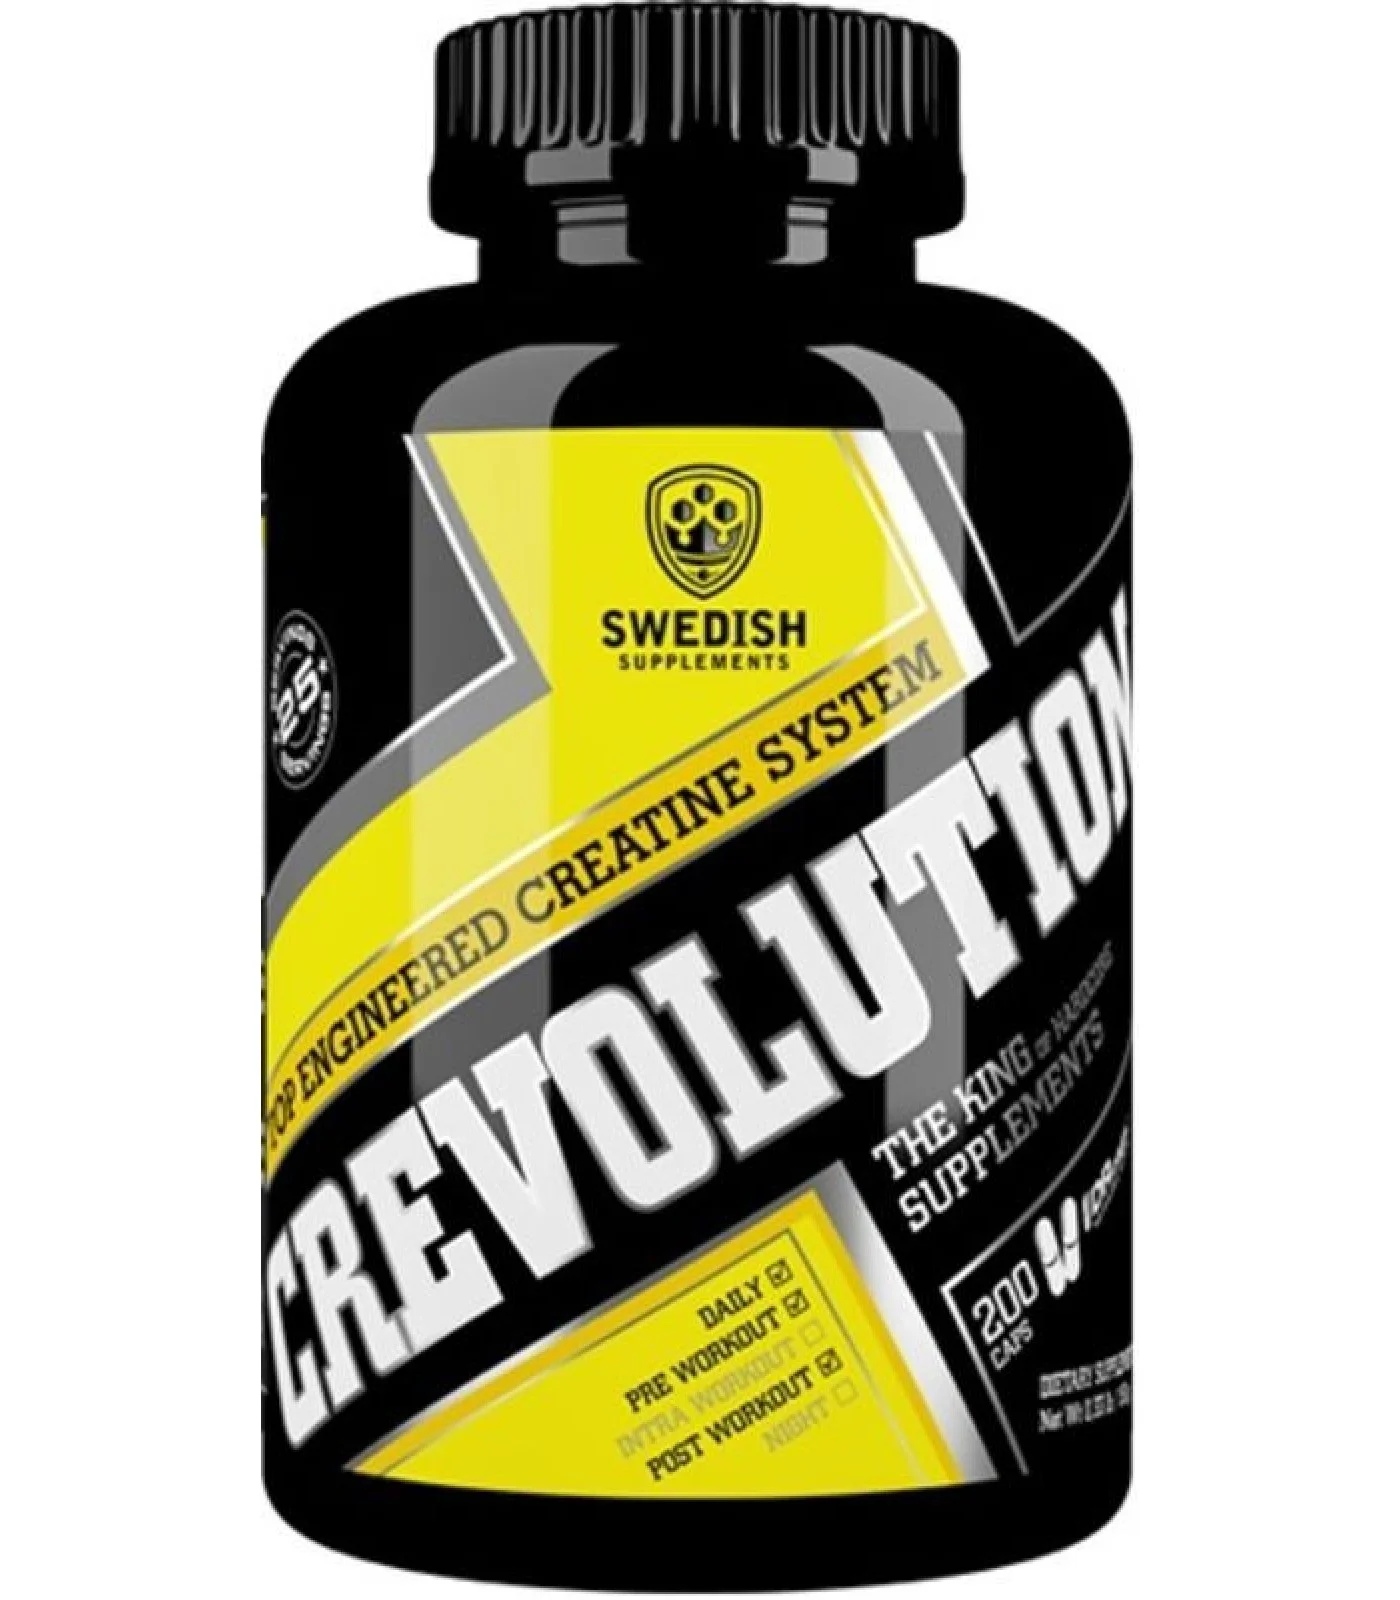 SWEDISH Supplements Crevolution Magnum / Watt\s Up -150 capsules